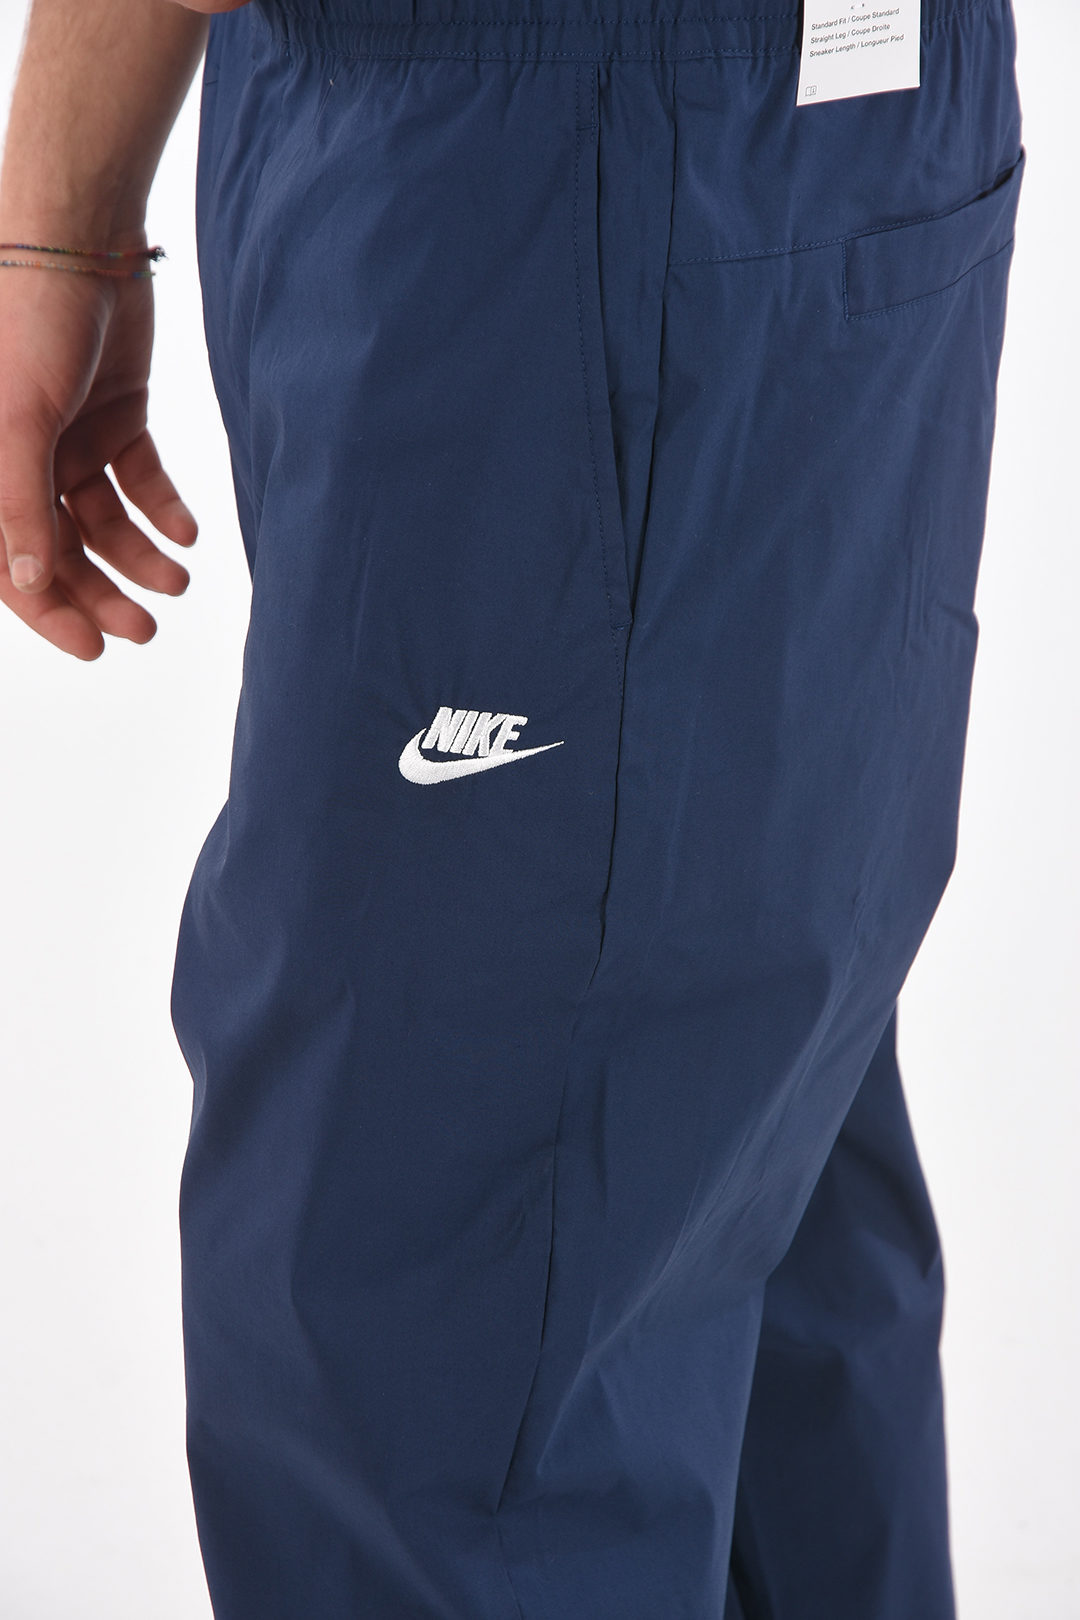 mayoria Artefacto auxiliar Nike Solid Color Standard Fit Pants men - Glamood Outlet